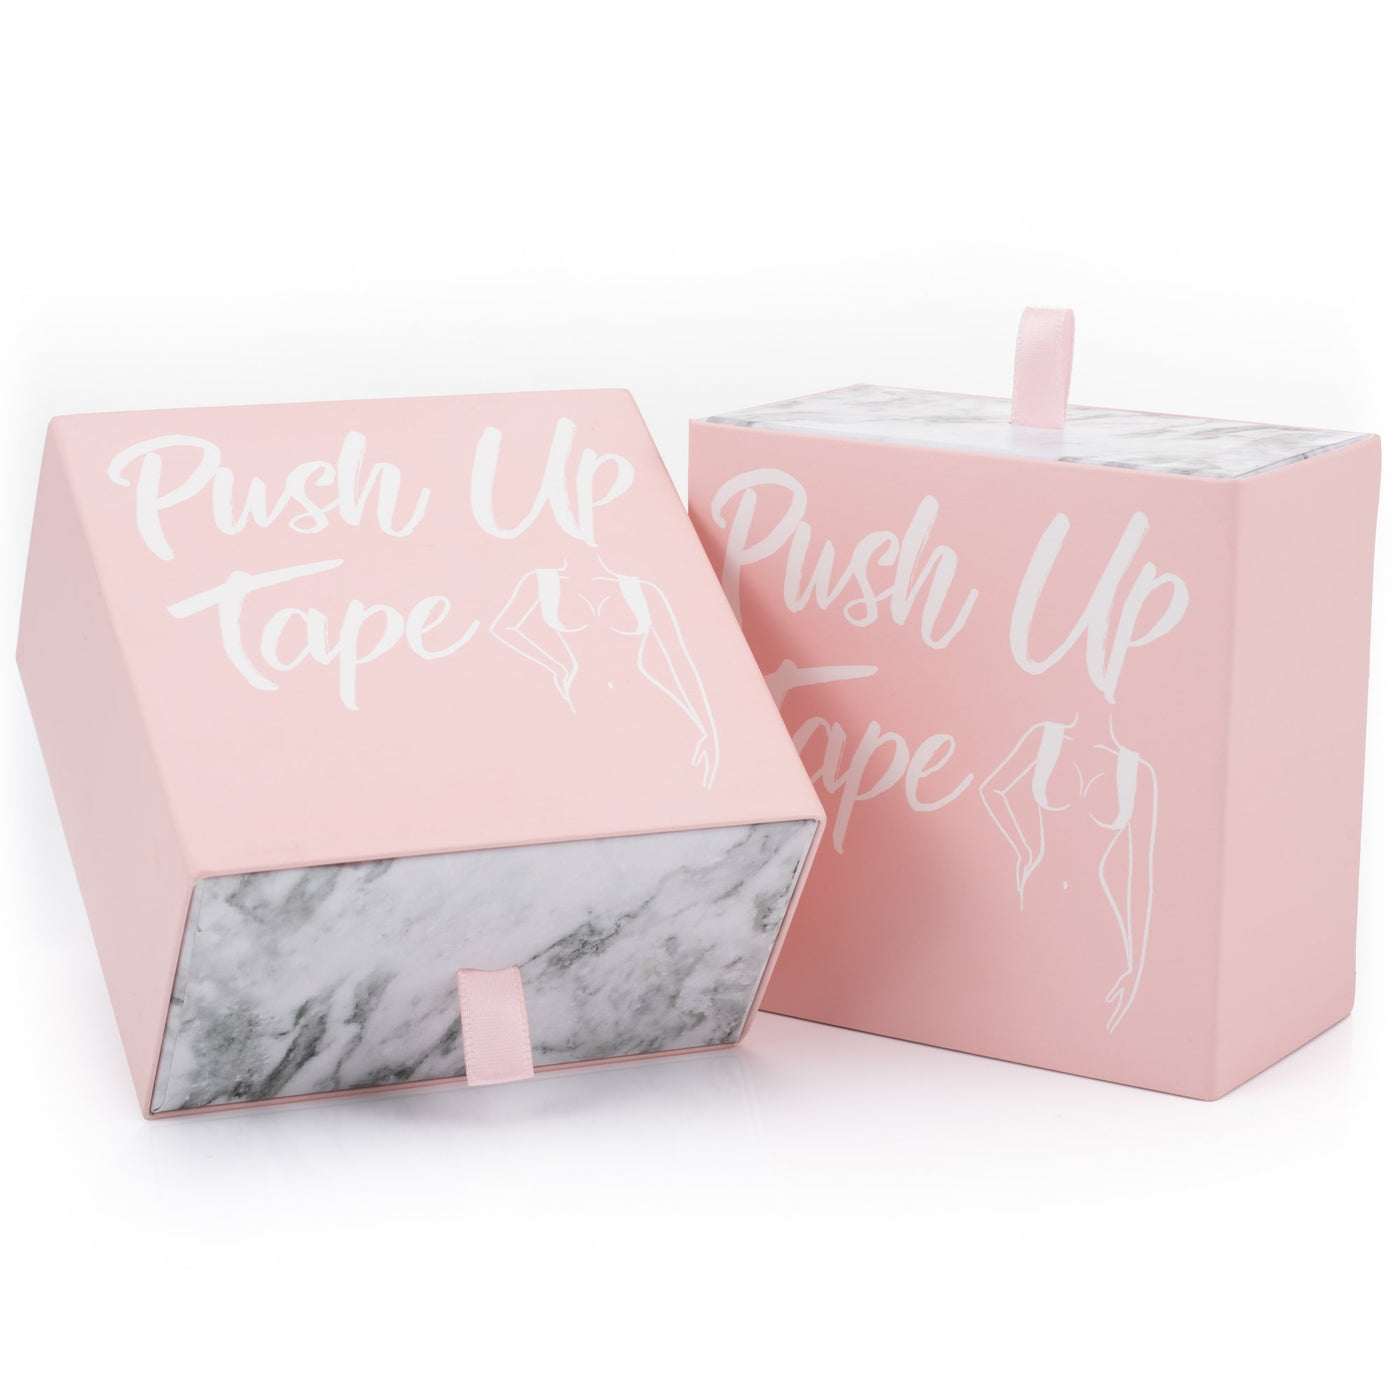 Push Up Tape - Sugar Almond